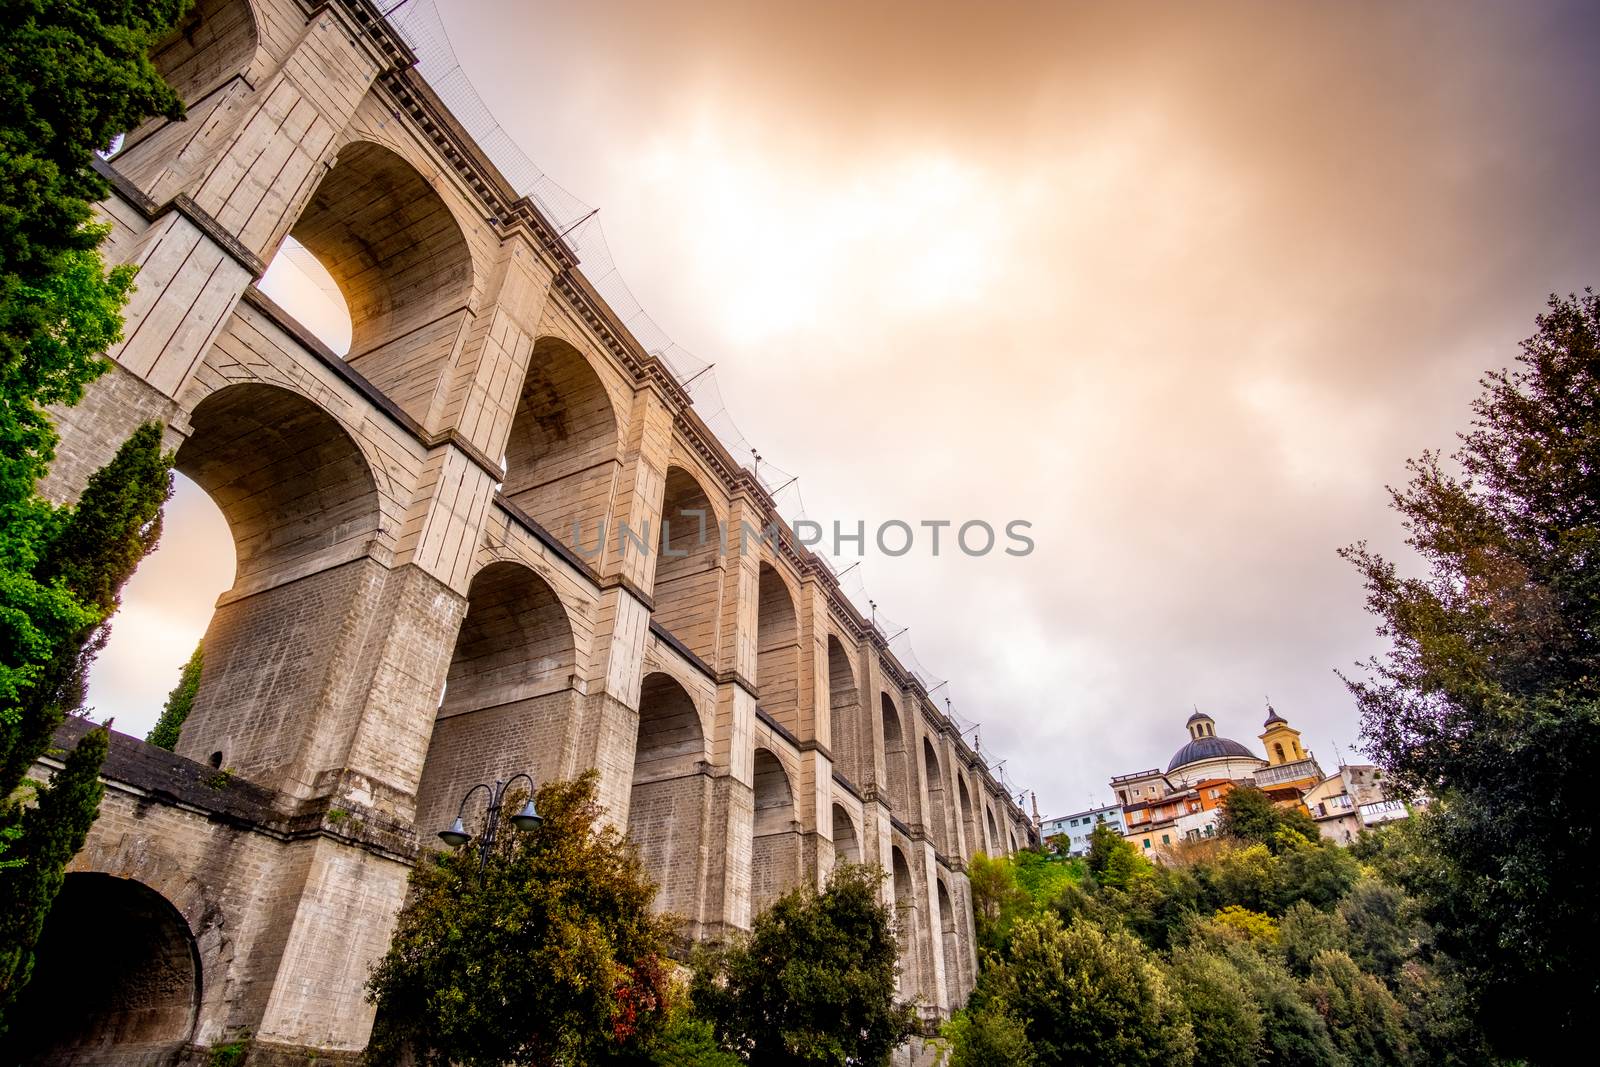 monumental bridge of Ariccia - Rome province in Lazio - Italy by LucaLorenzelli